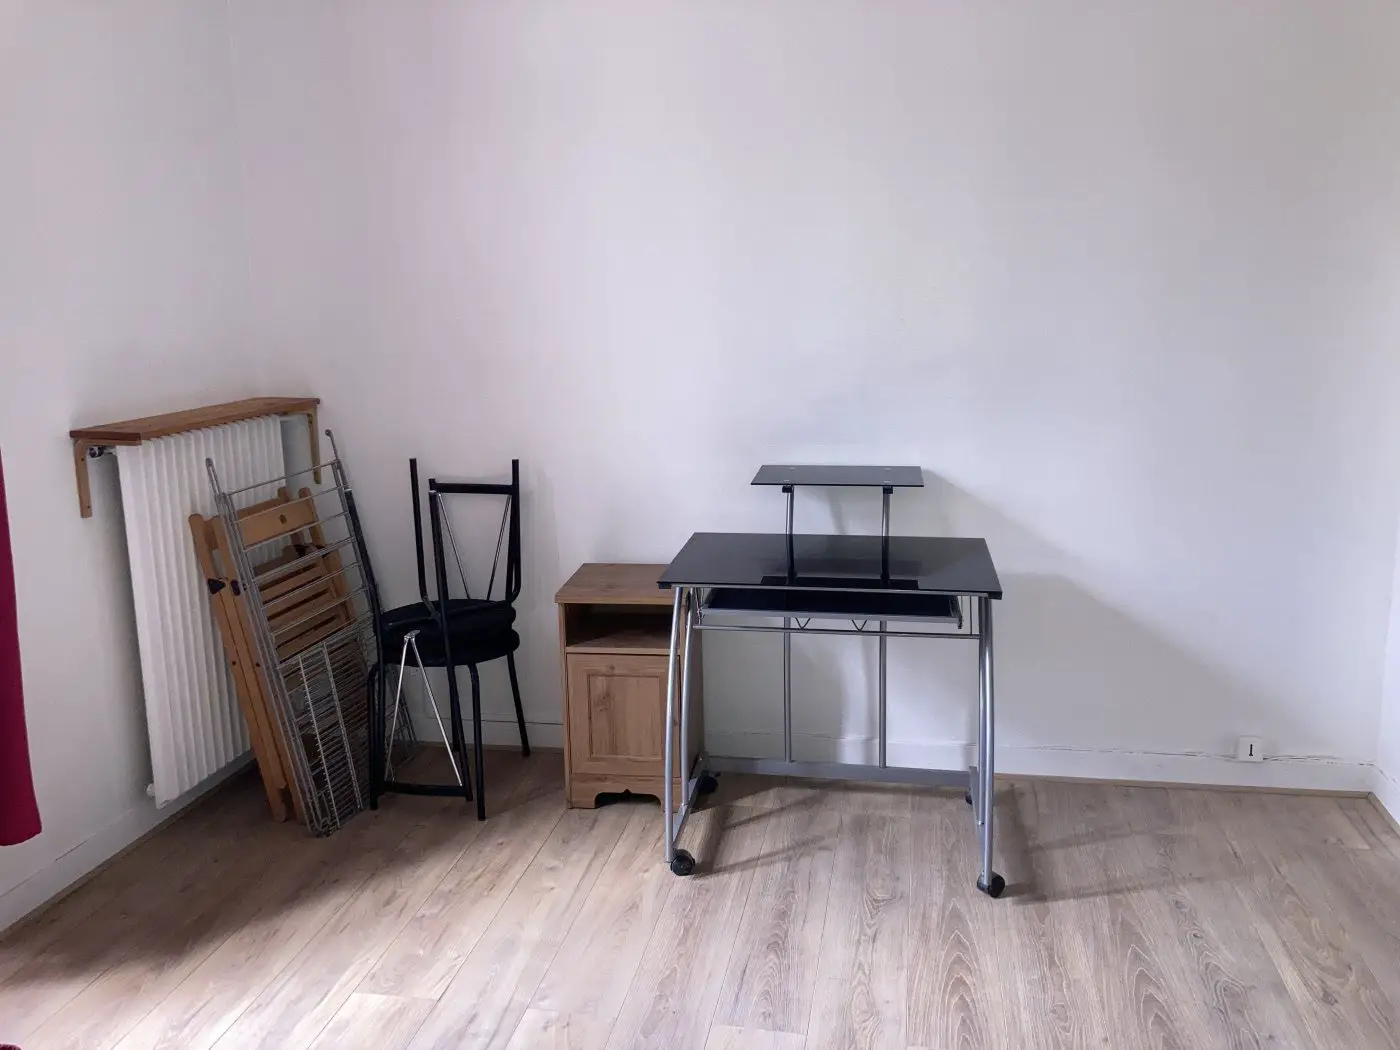 Location studio meublé 20 m2